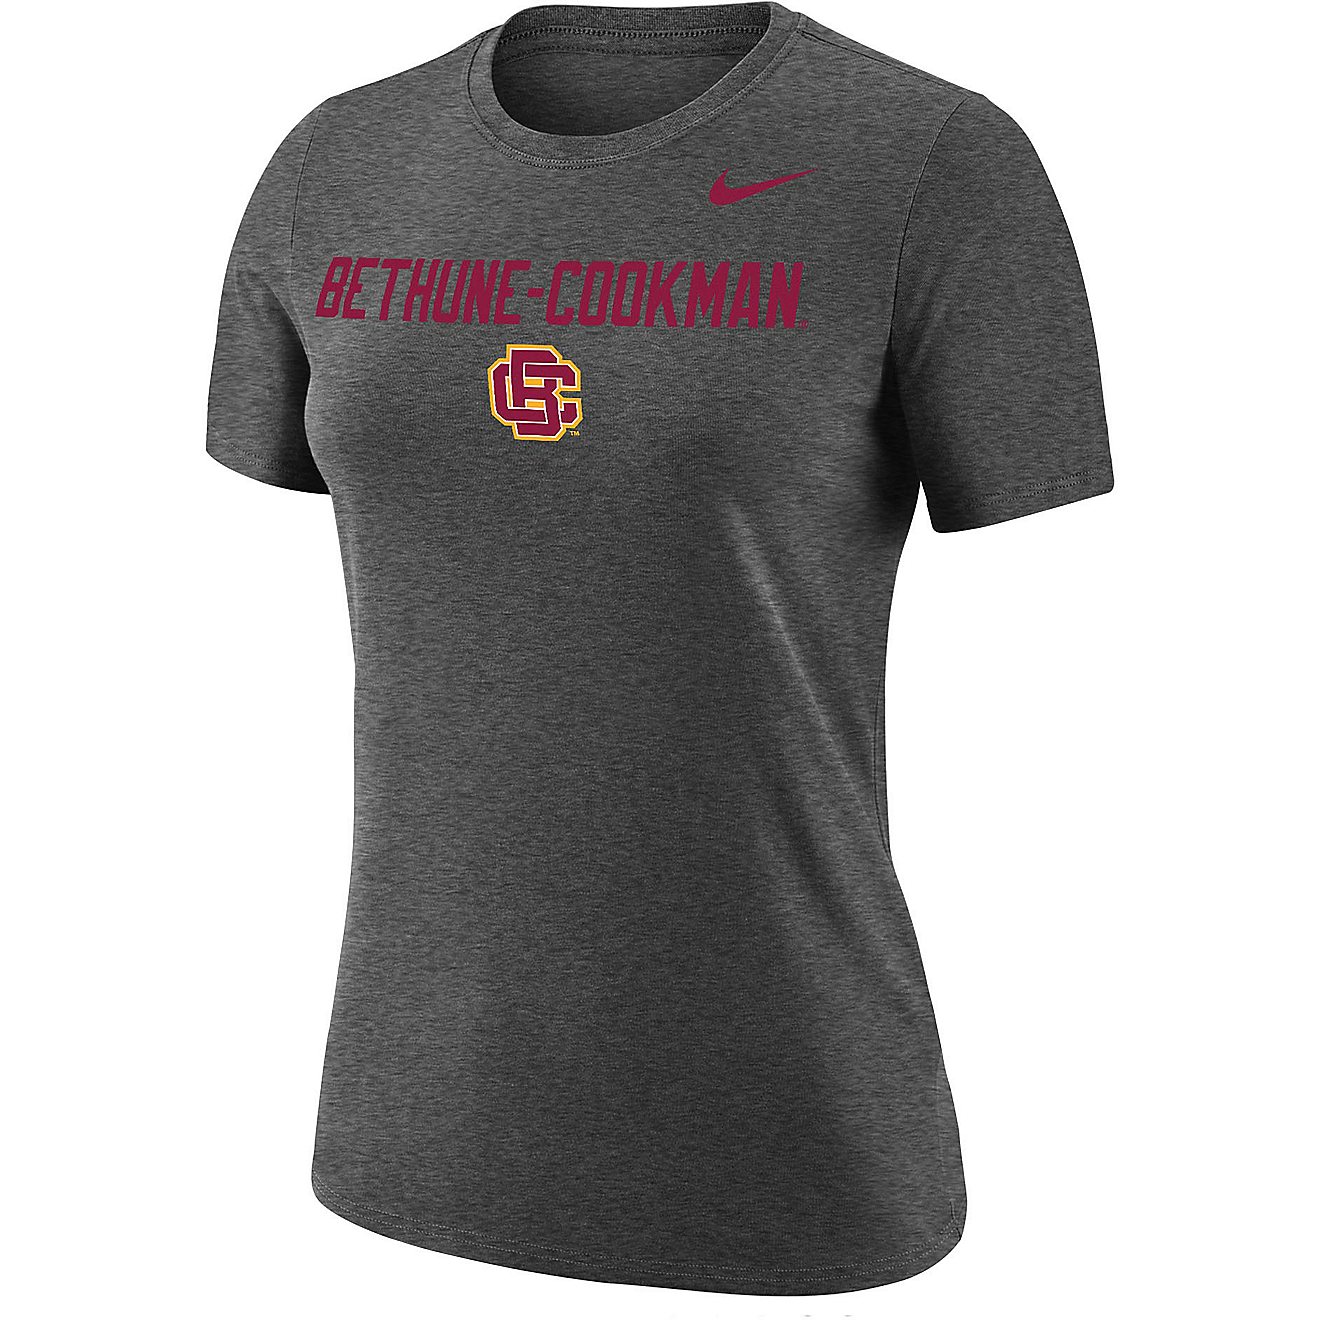 Nike Women's Bethune-Cookman University Dri-FIT Cotton Short Sleeve T ...